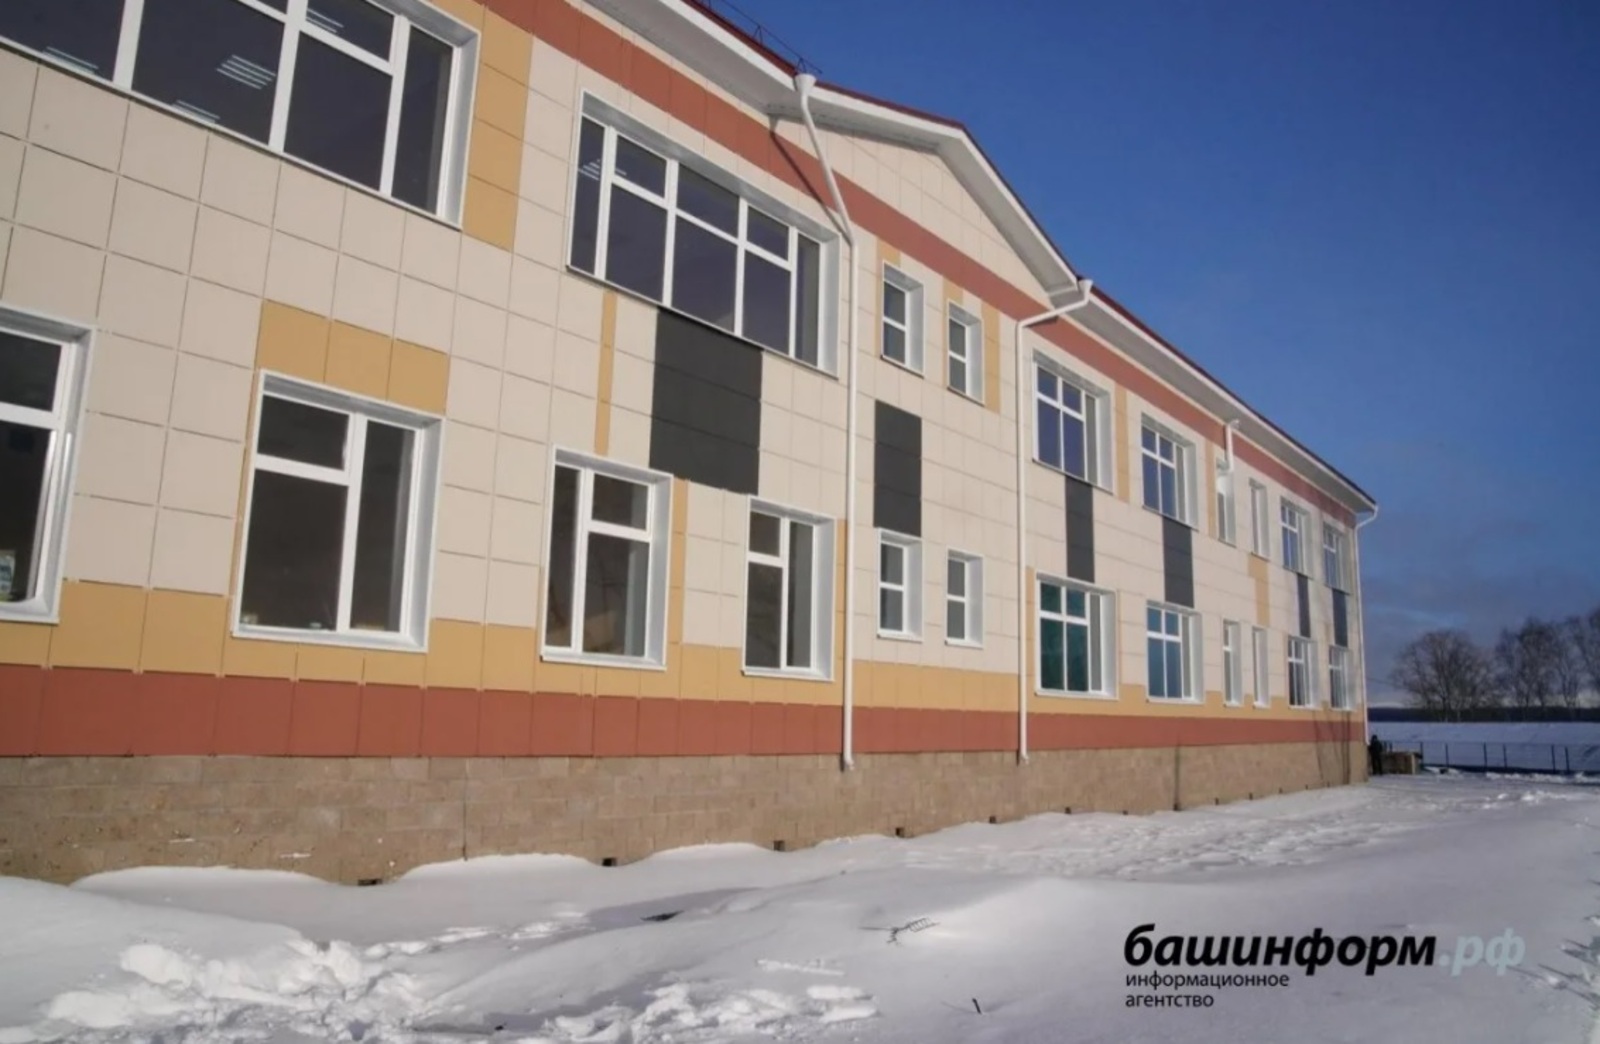 В Башкирии до 2026 года отремонтируют 365 школ на 20 млрд рублей